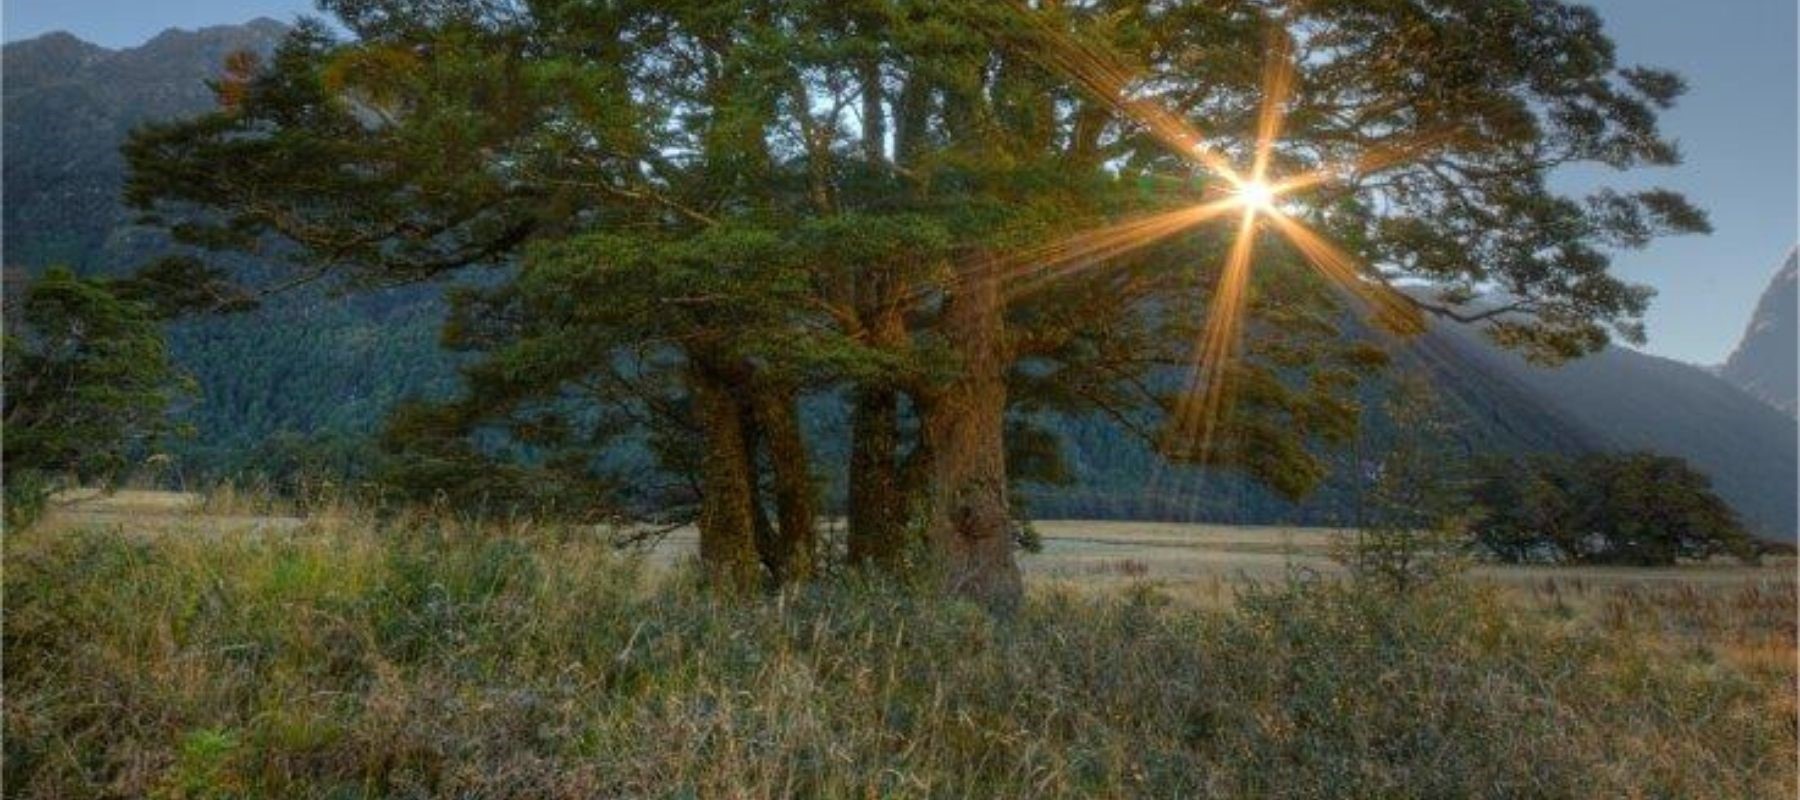 A light shining through a totara tree in Milford Sound.